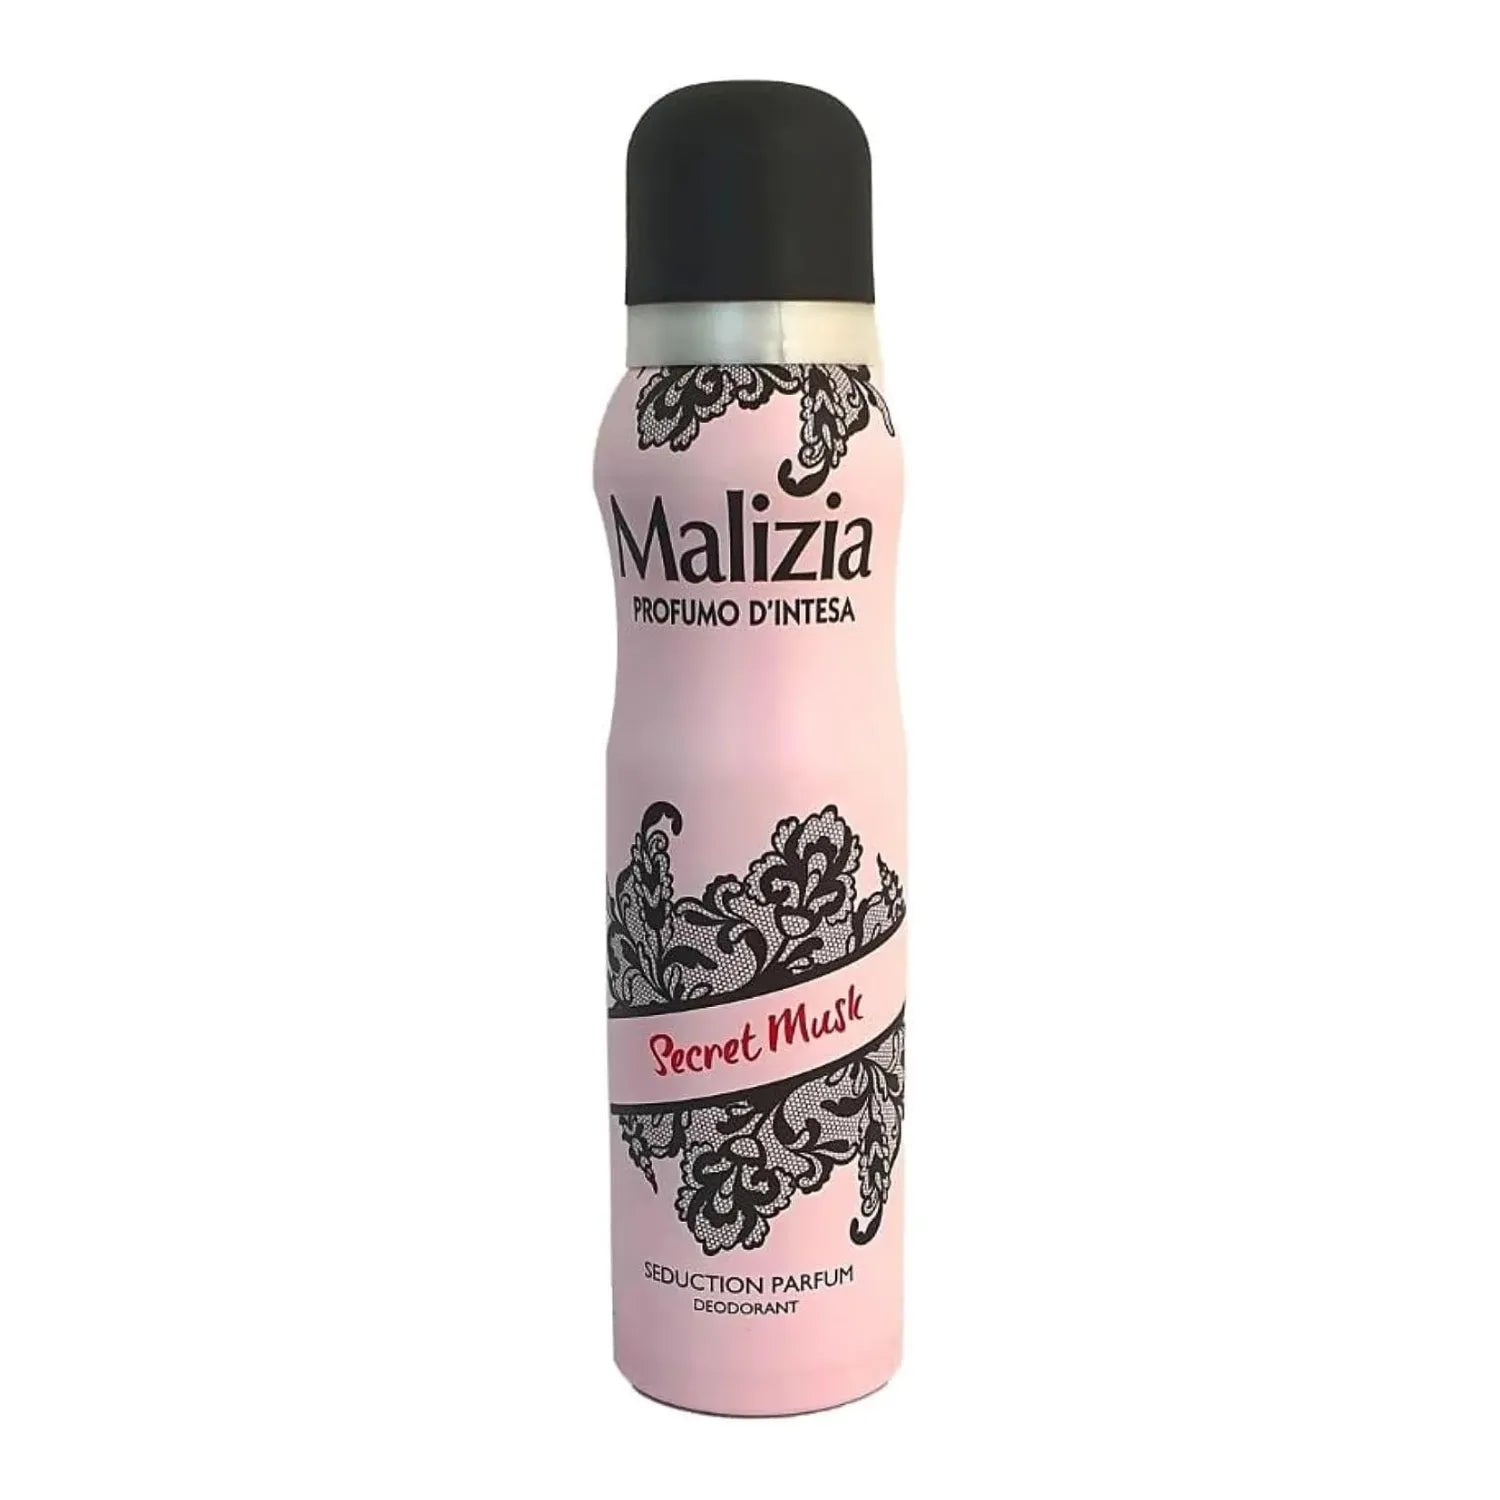 Malizia Seduction Parfum Secret Musk 150ml